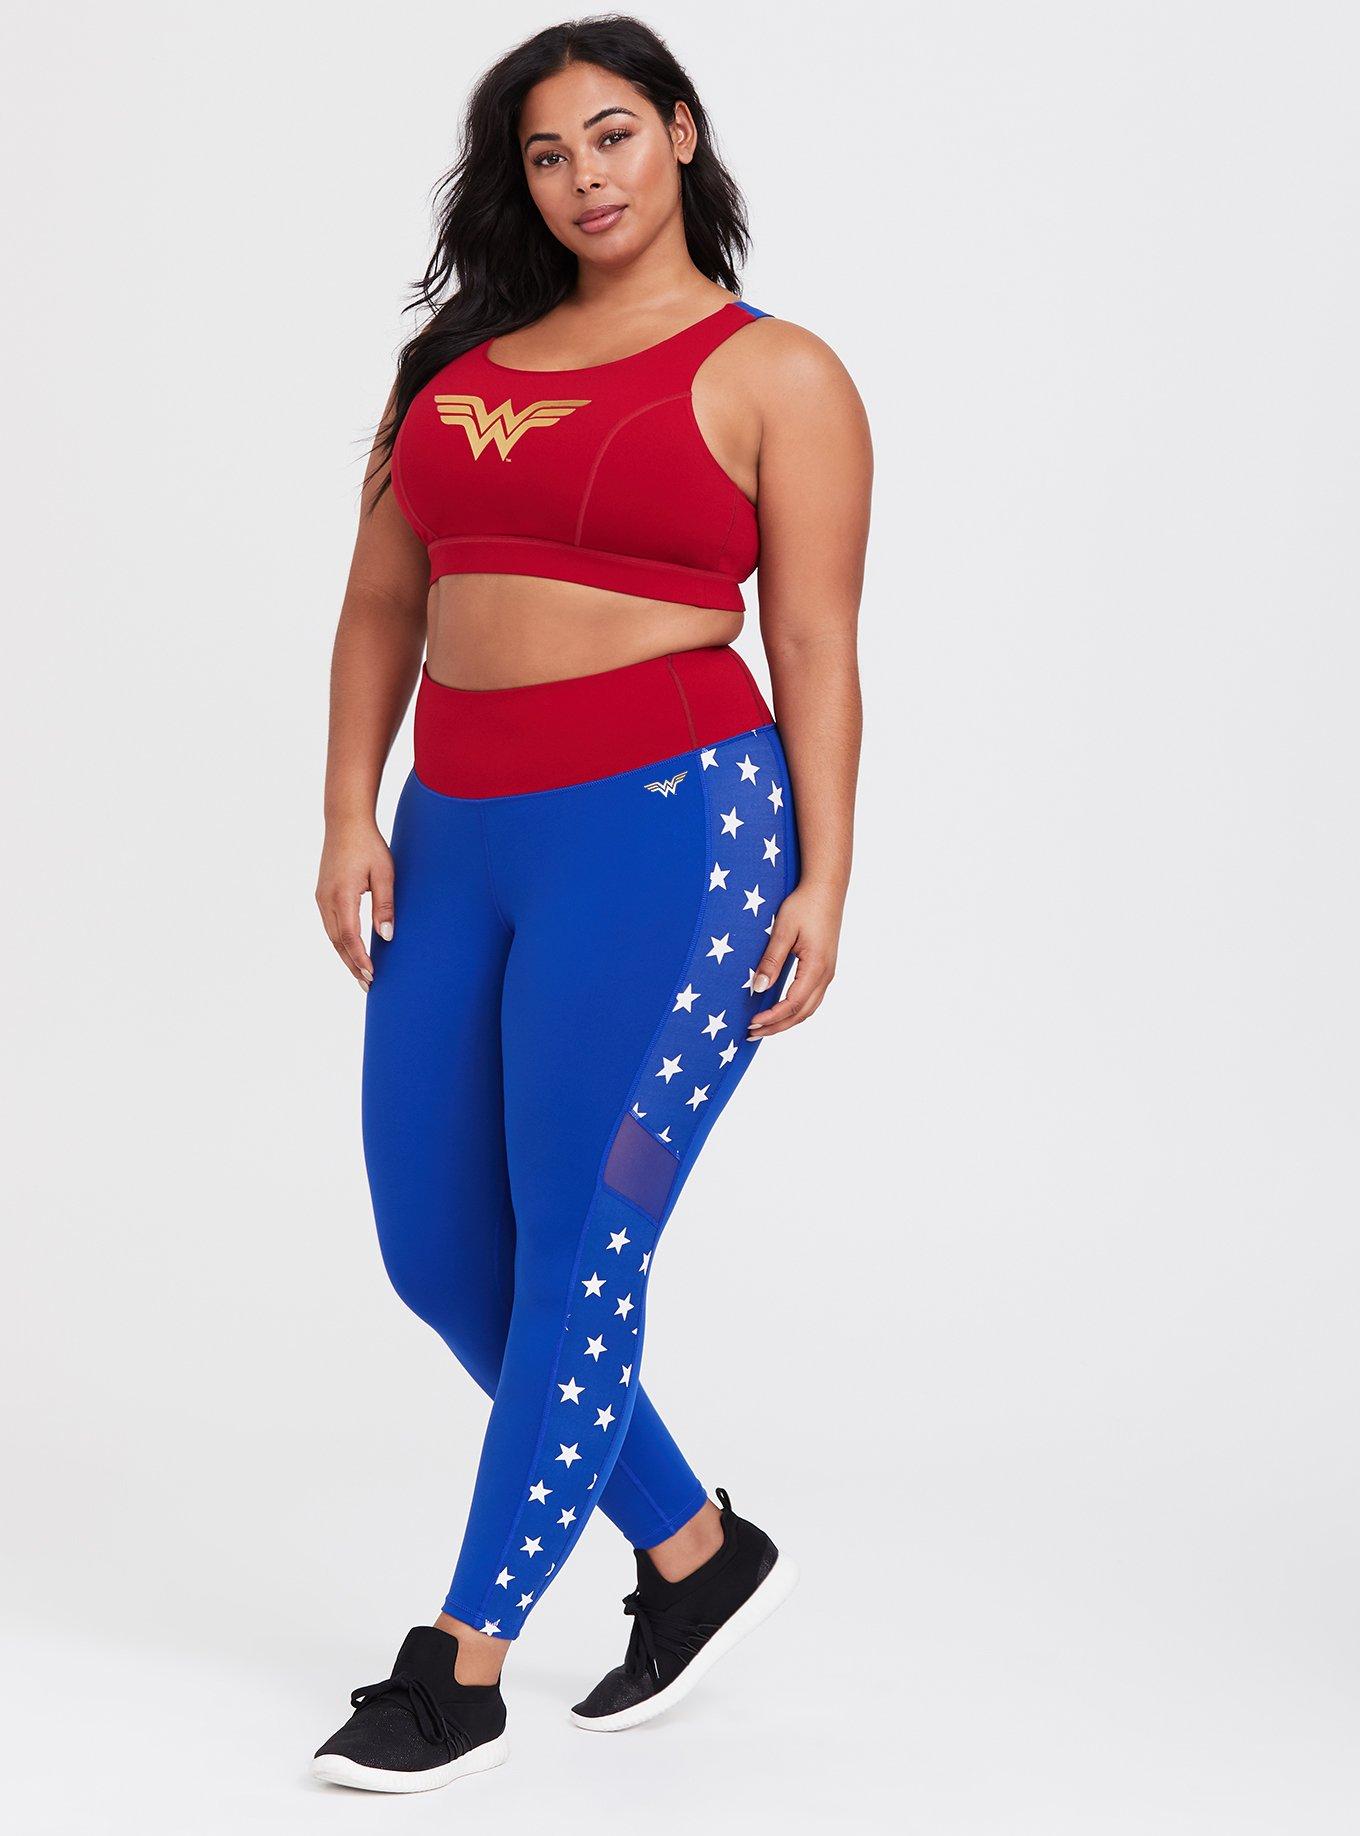 Women's Wonder Woman Yoga Athletic Pants Leggings Size Small